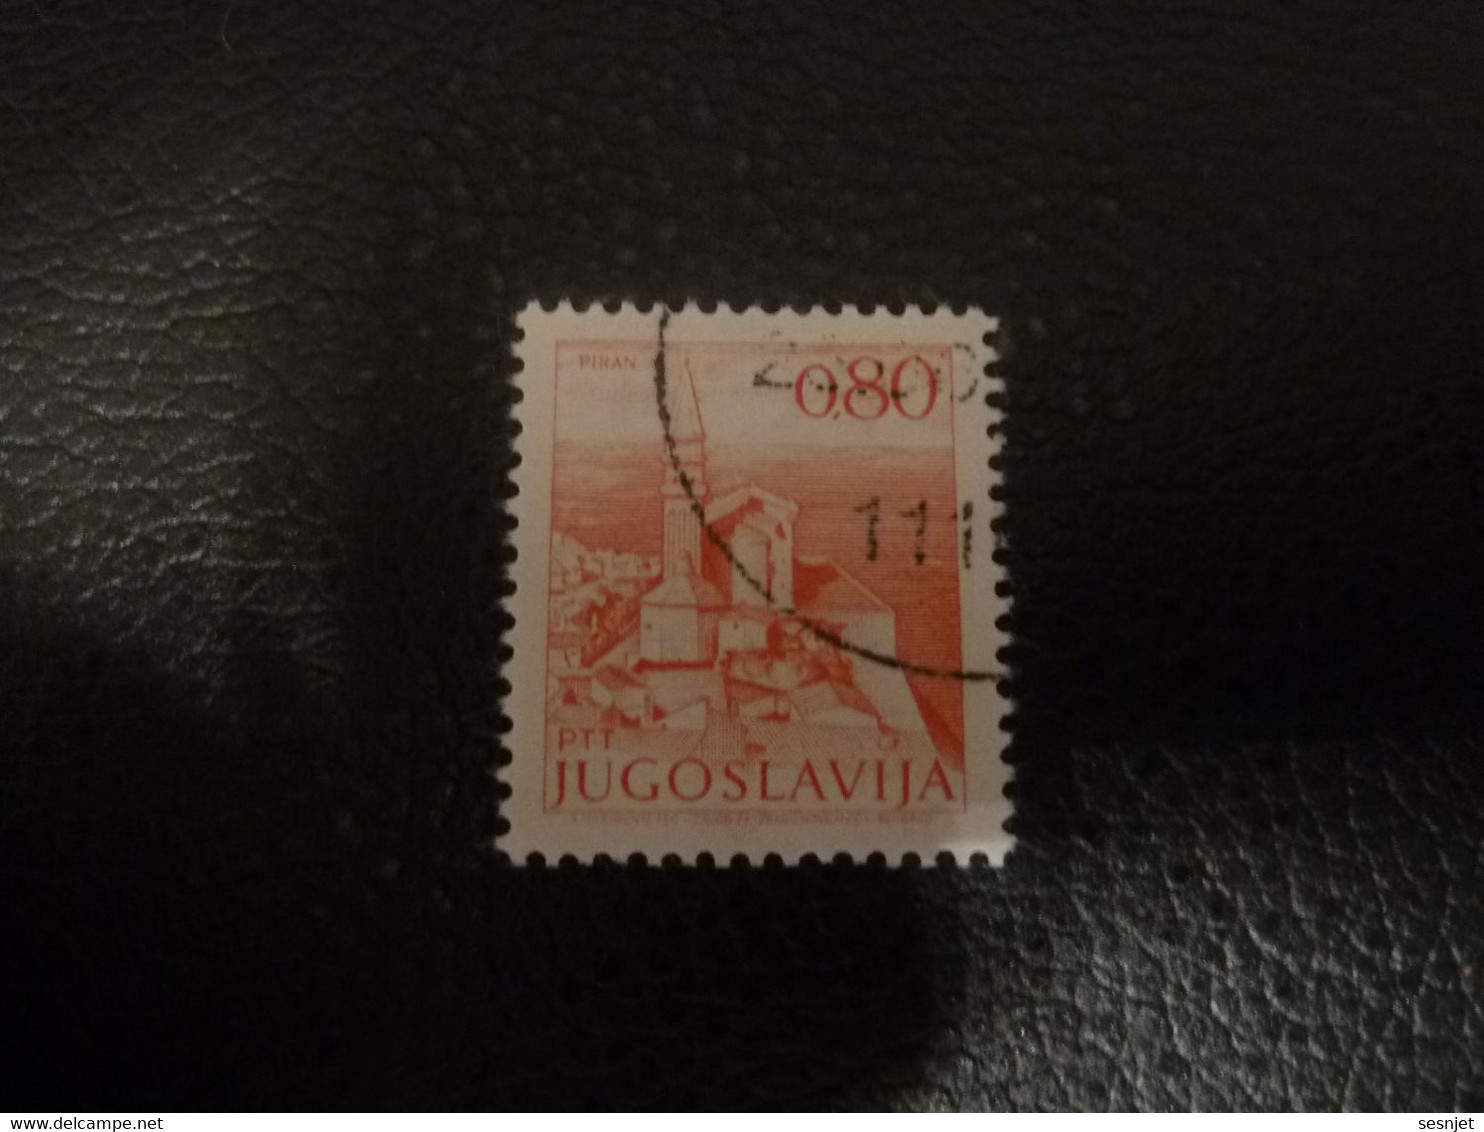 Ptt - Jugoslavija - Piran - Val 0.80 - Orange - Oblitéré - - Used Stamps